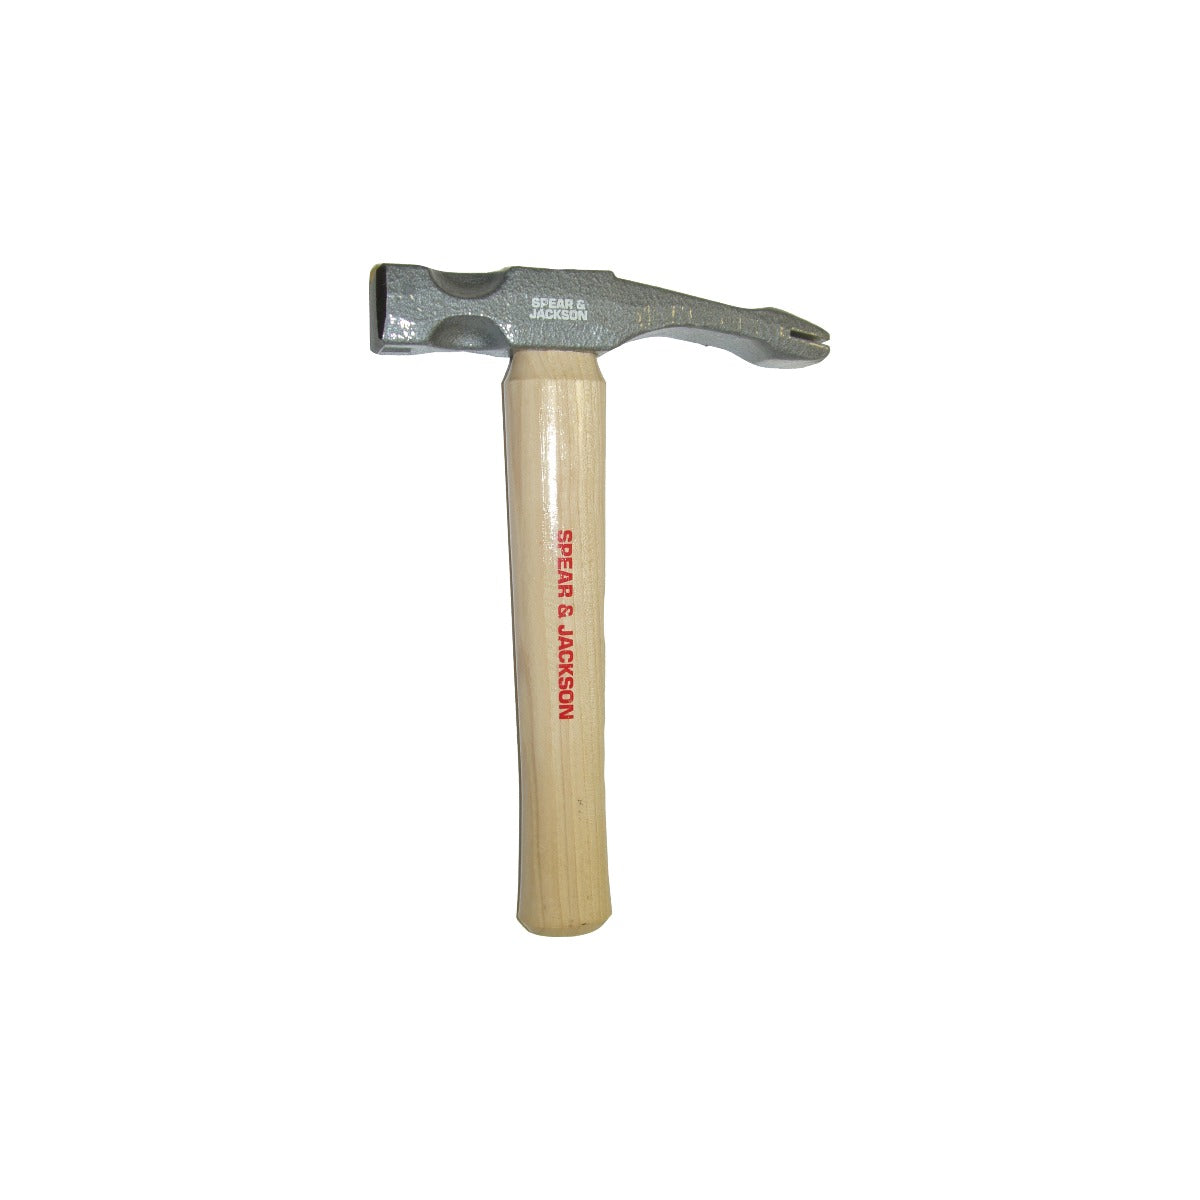 Spear & Jackson Single End Scutch Hammer